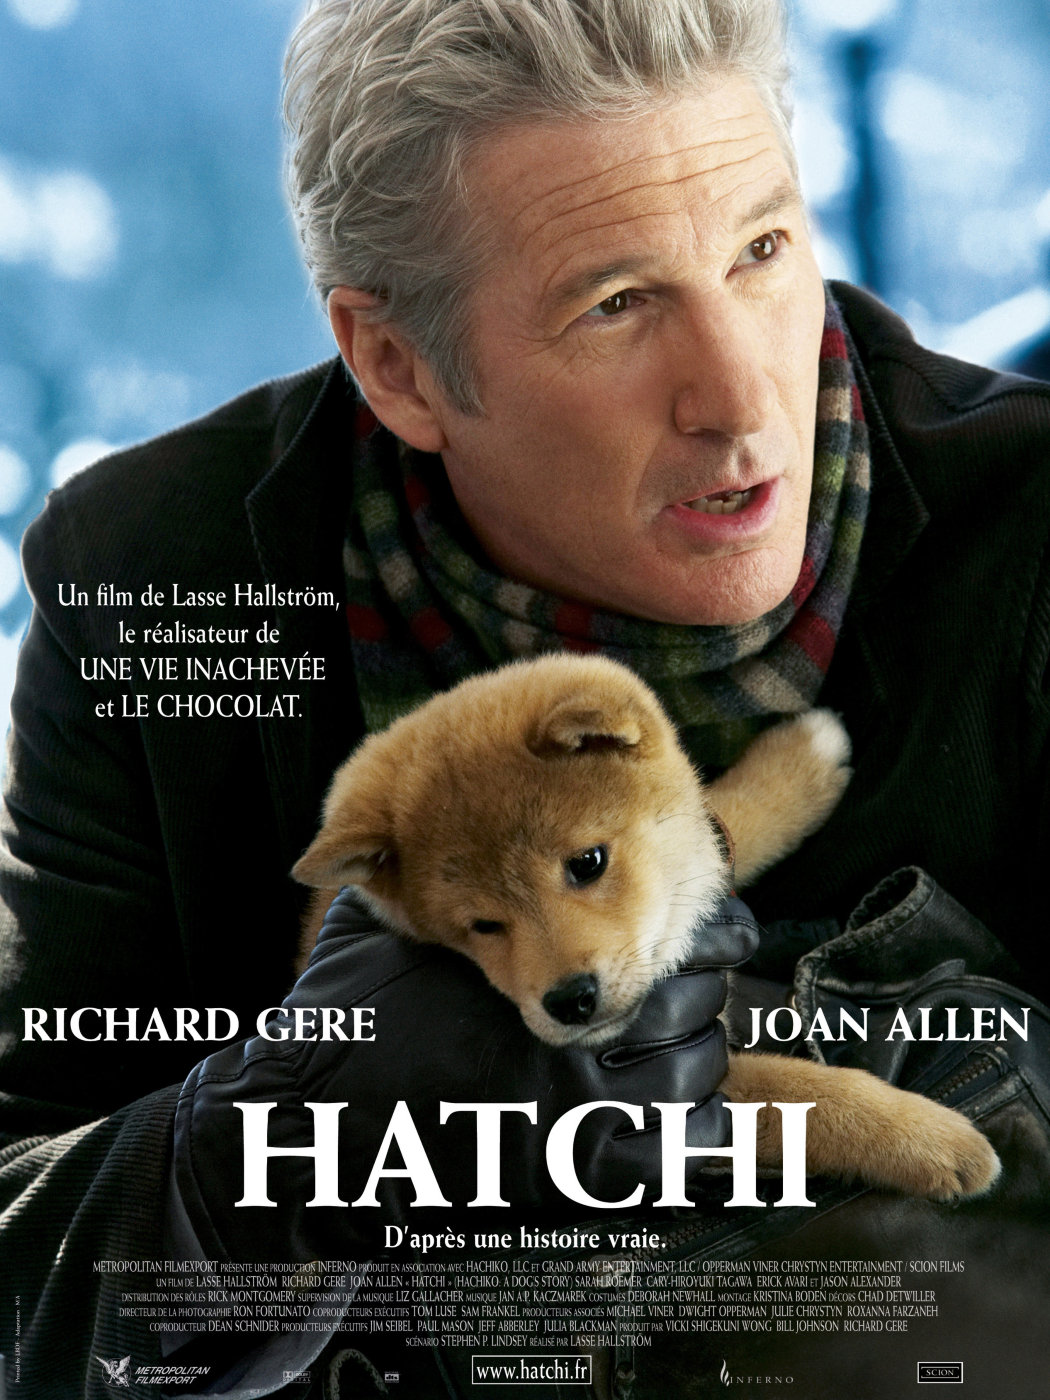 Stiahni si HD Filmy Haciko: Pribeh psa / Hachiko: A Dog's Story (2009)(CZ/EN)(1080p) = CSFD 86%